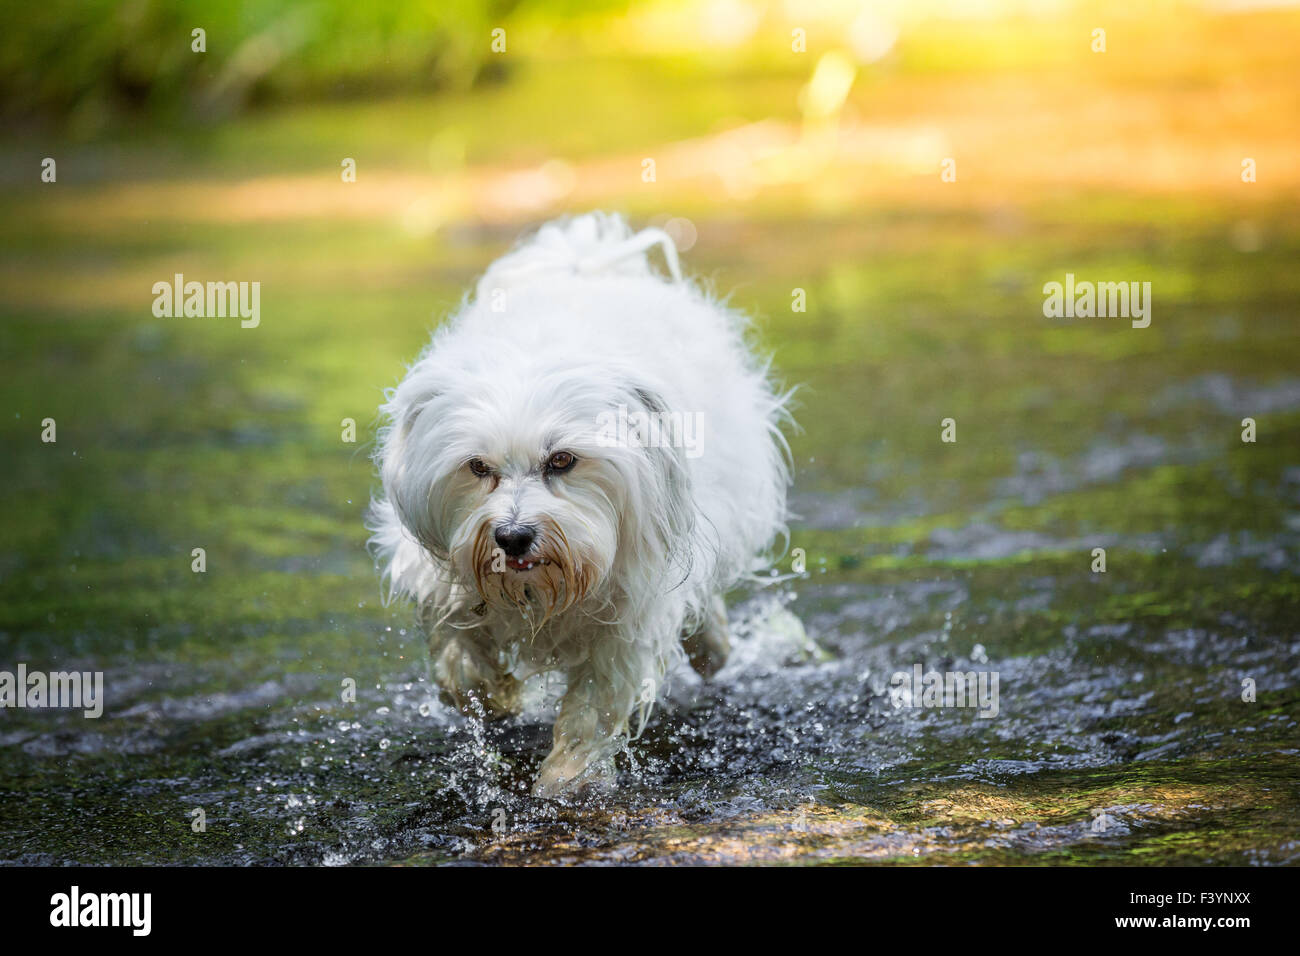 Dog runs through the water Stock Photo